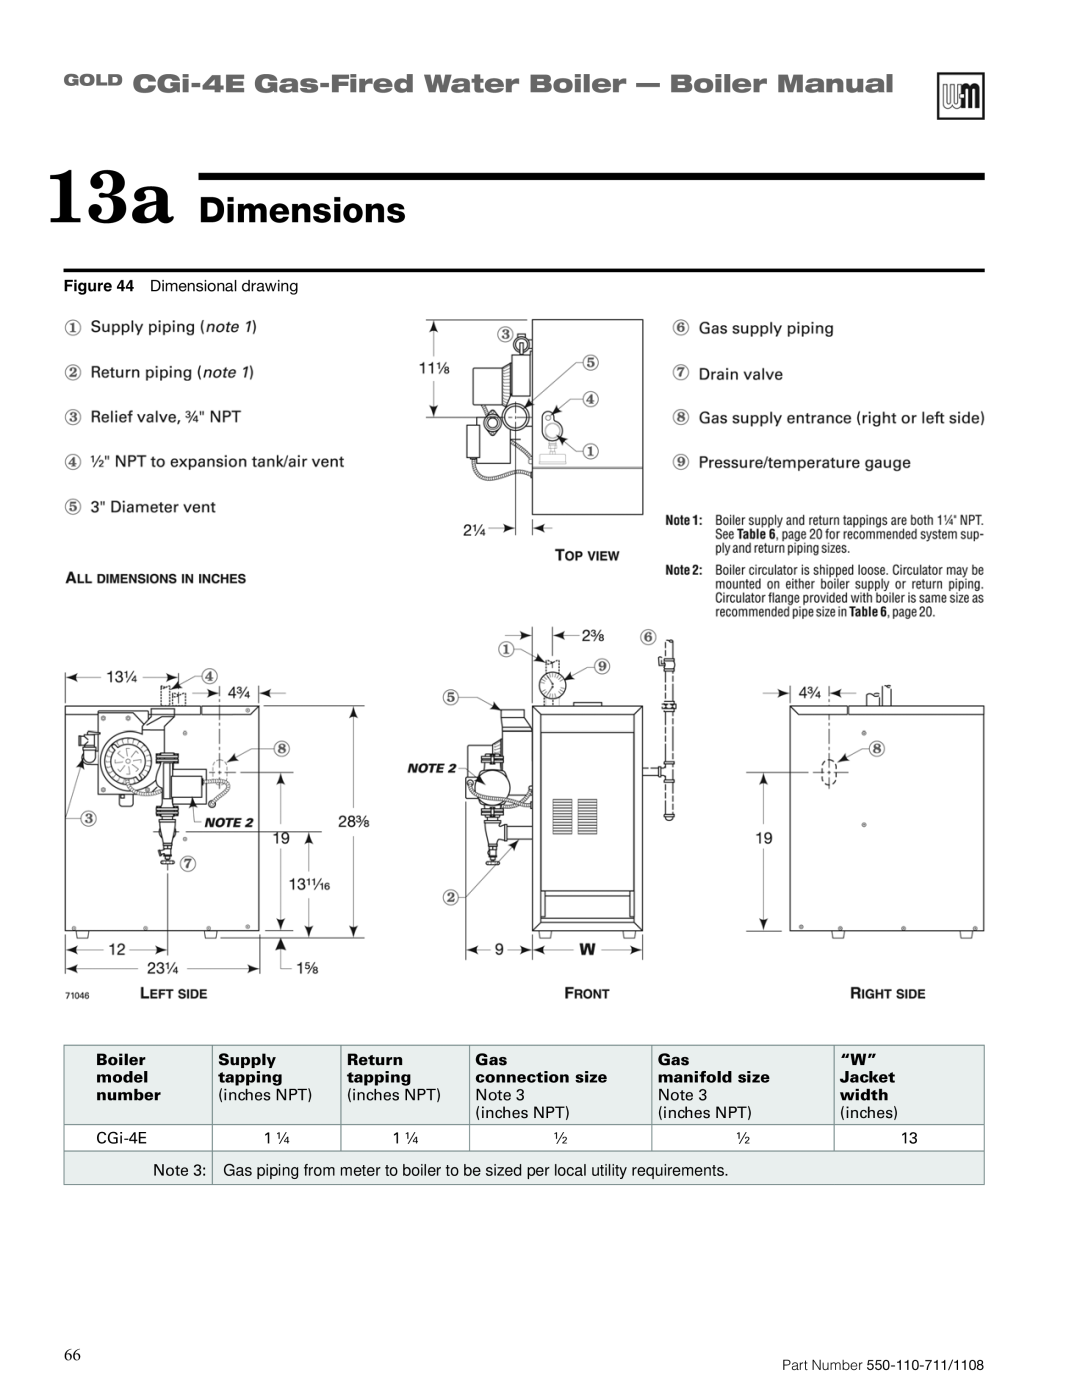 Weil-McLain CGI-4E manual 13a Dimensions, GOLD CGi-4E Gas-FiredWater Boiler - Boiler Manual 